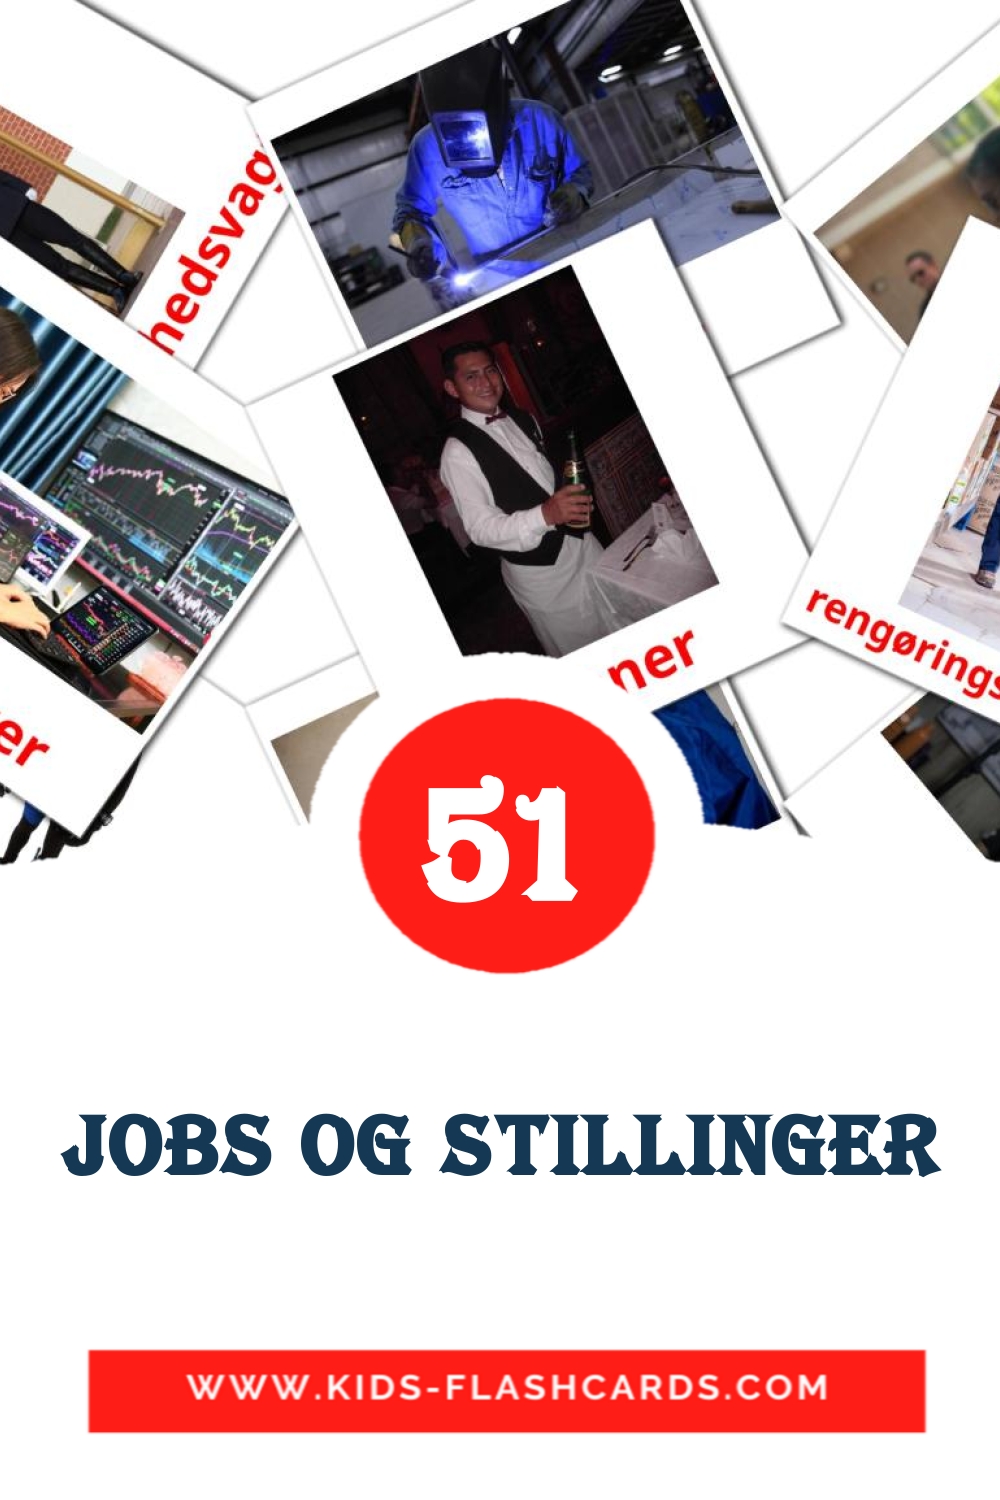 51 tarjetas didacticas de Jobs og stillinger para el jardín de infancia en dansk